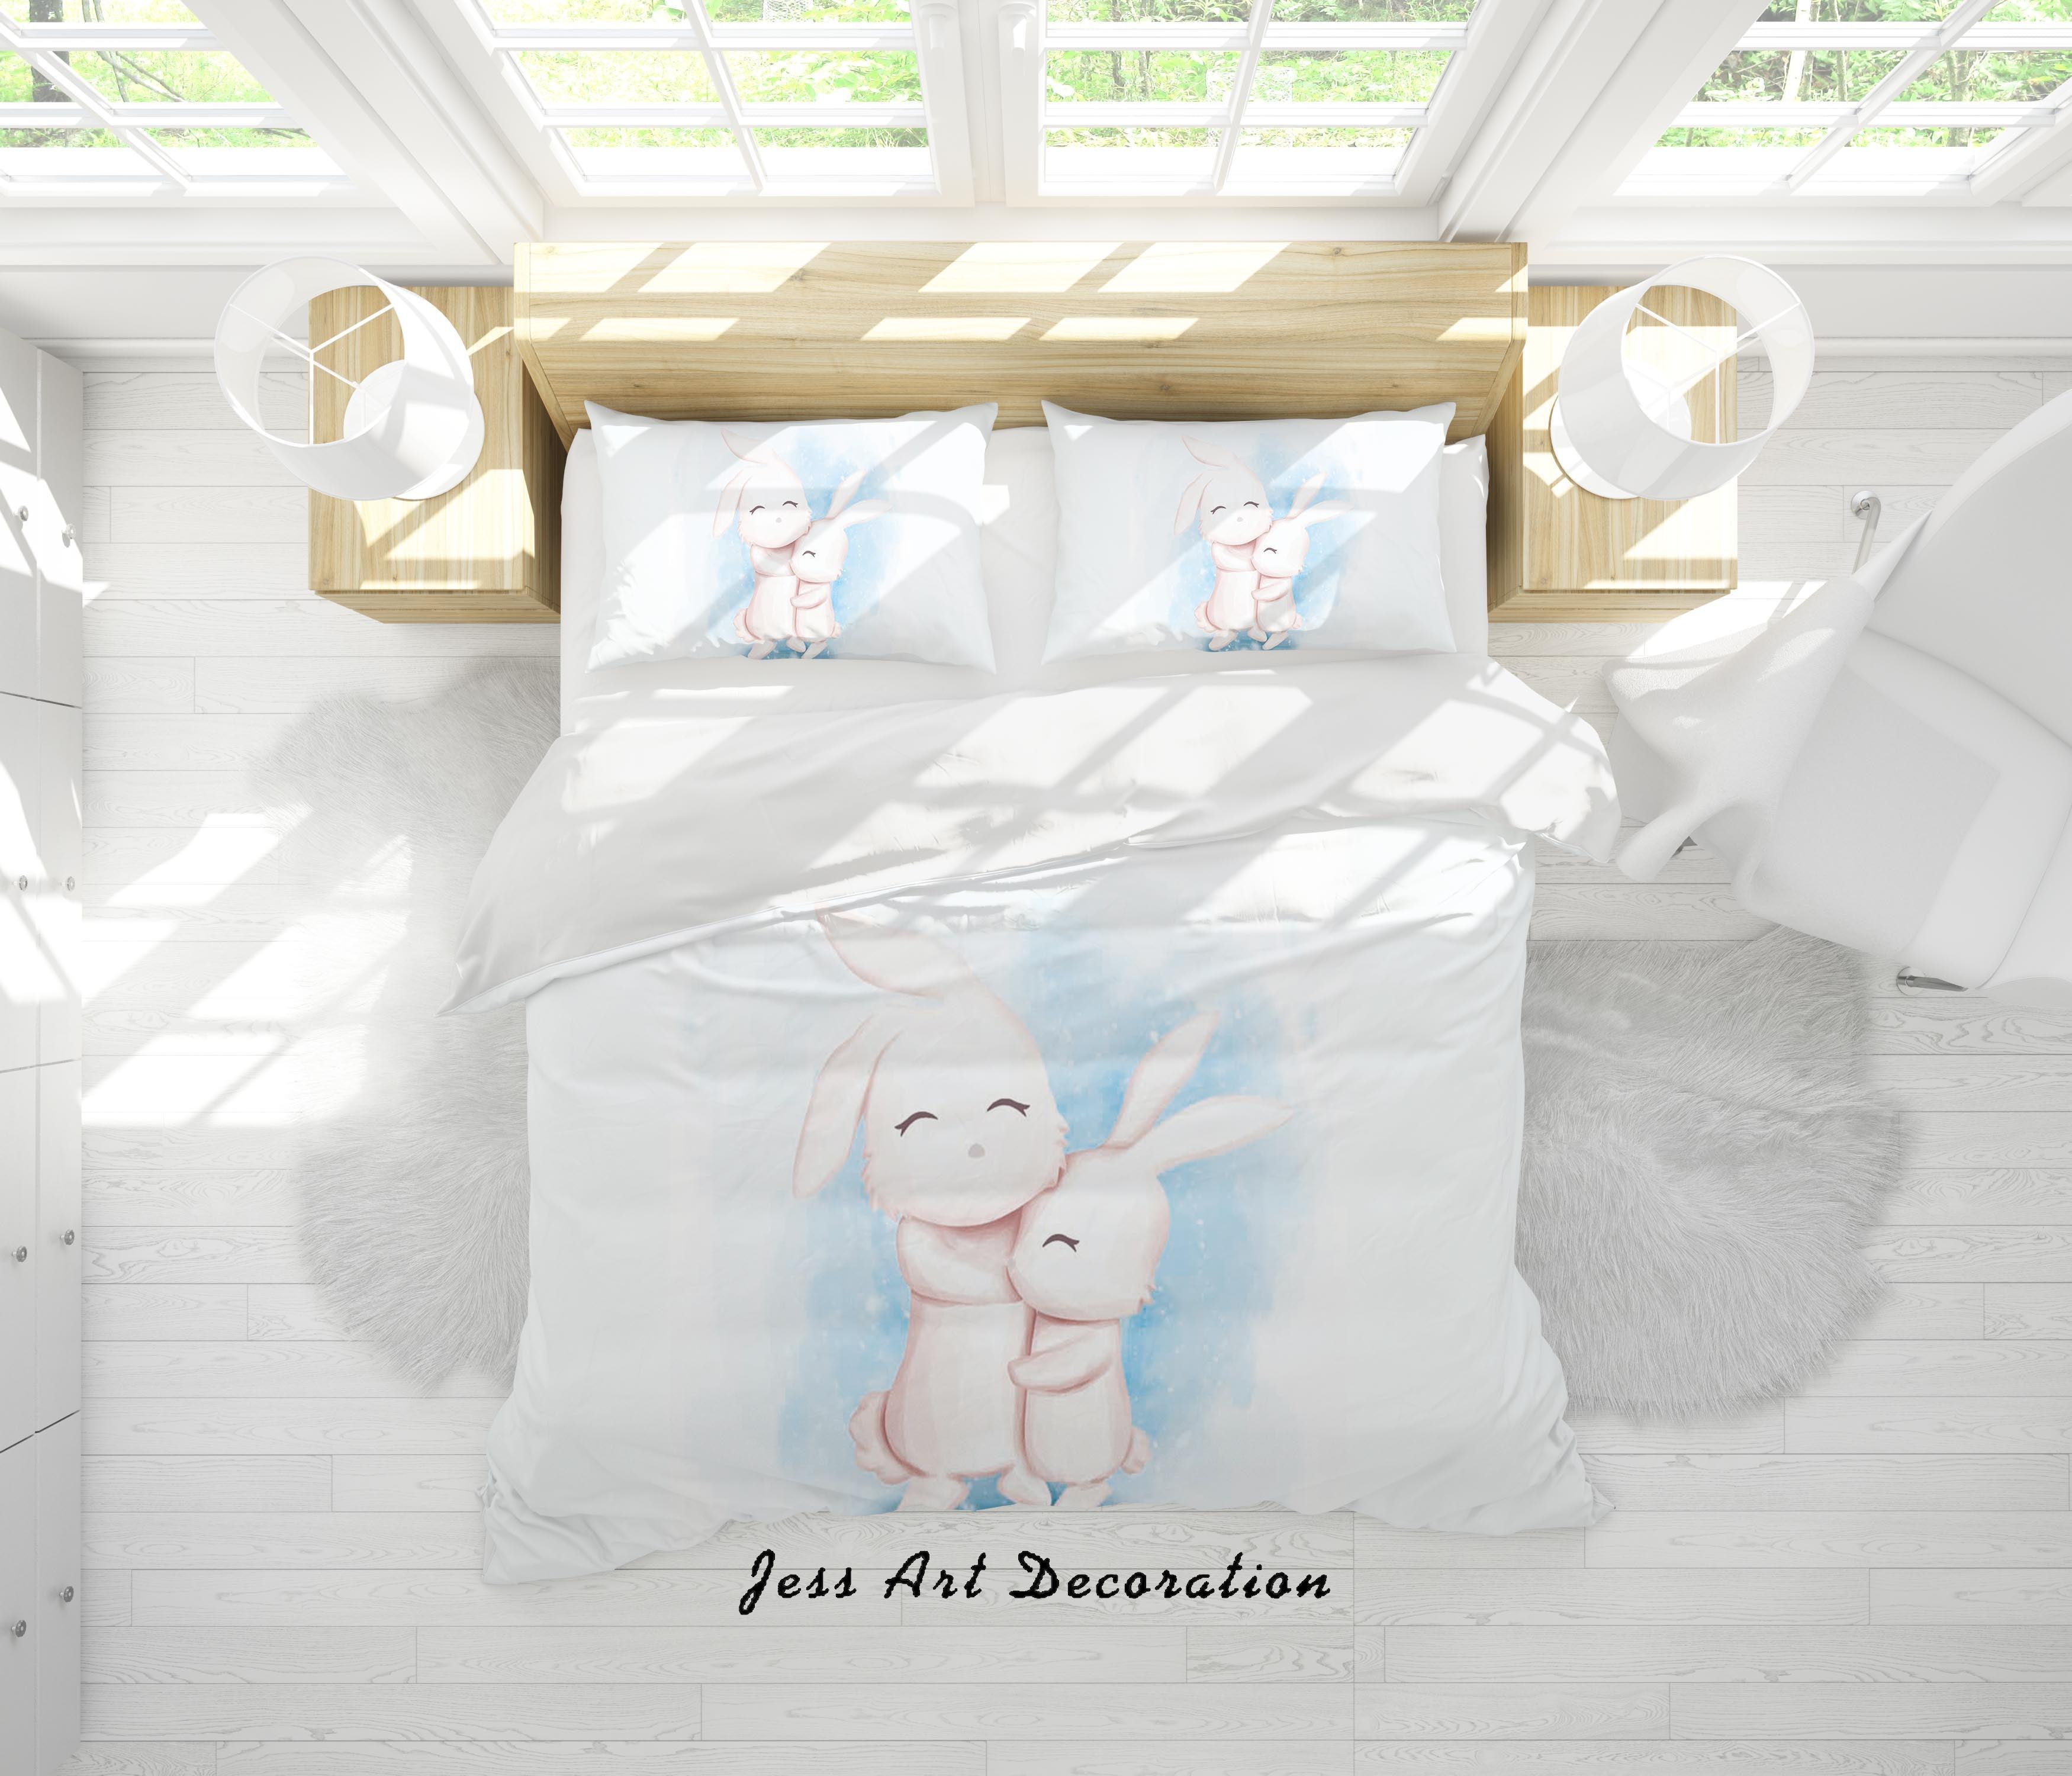 3D White Blue Rabbit Quilt Cover Set Bedding Set Duvet Cover Pillowcases SF35- Jess Art Decoration